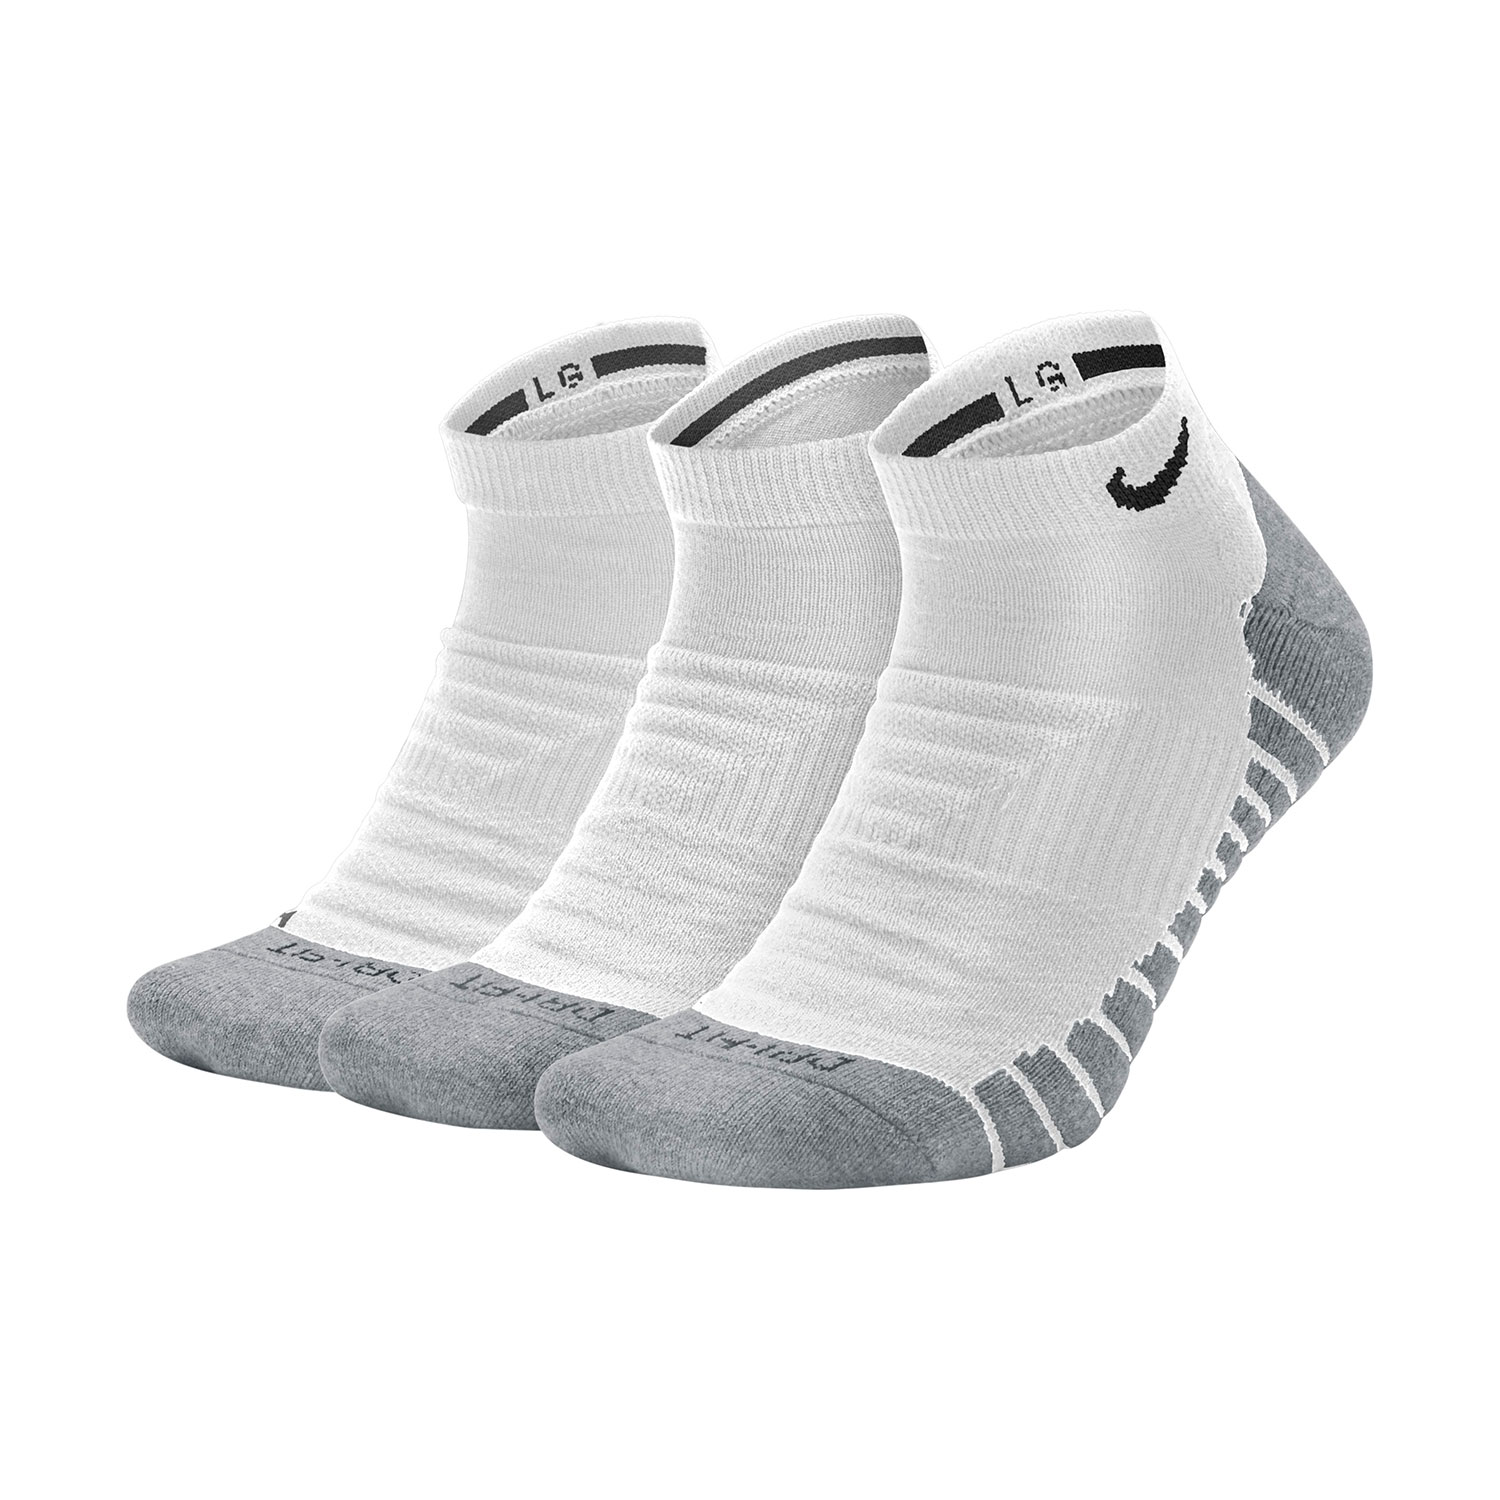 NIKE Everyday Dri-Fit Lightweight 3 Pack Crew Socks - WHITE